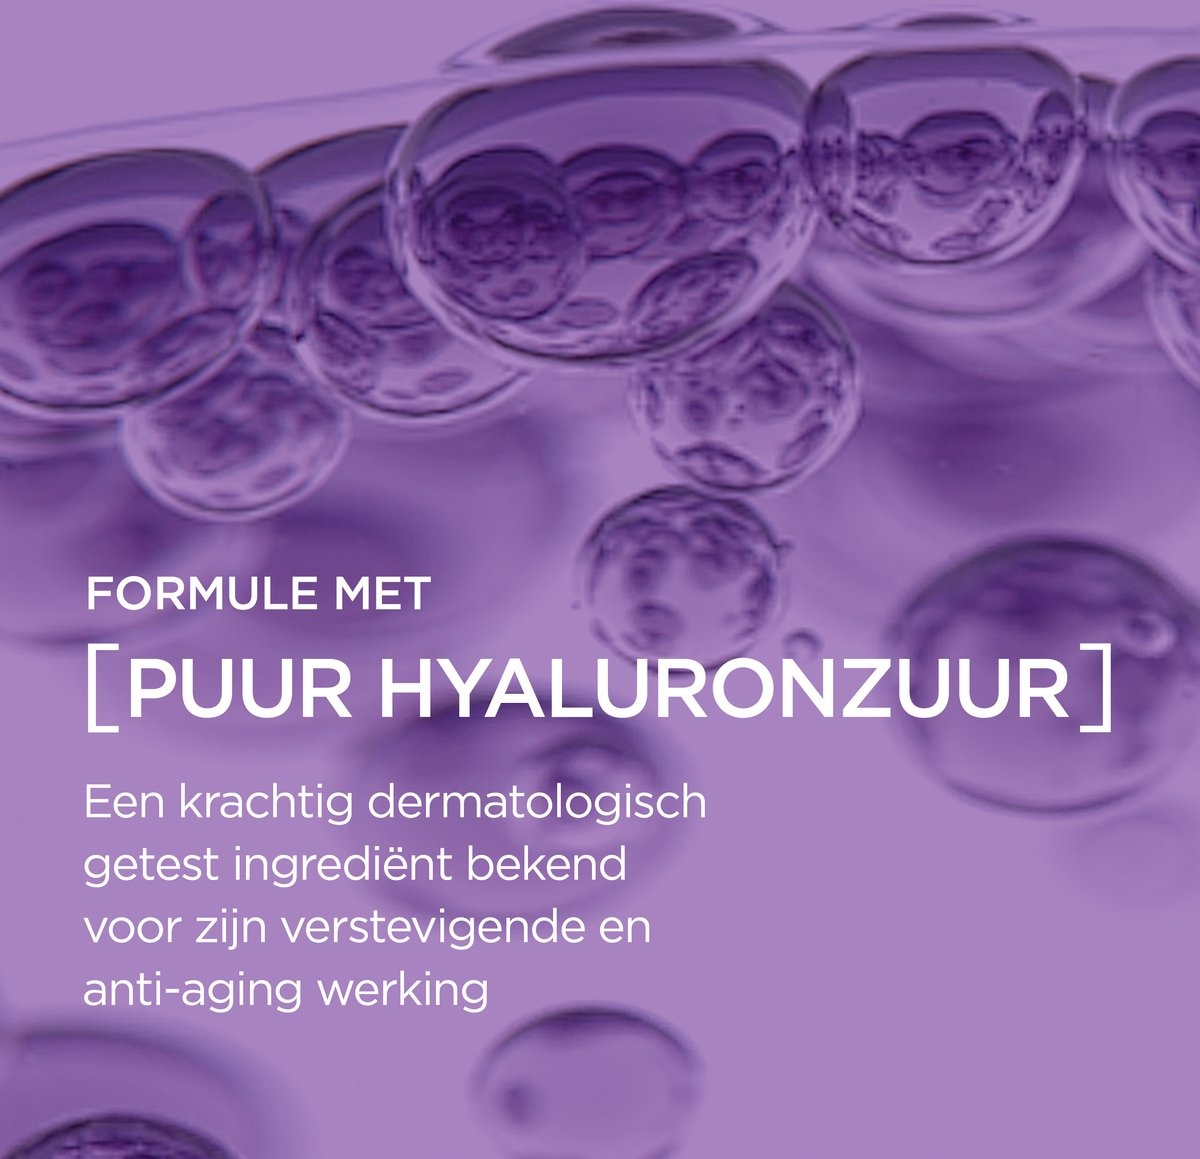 L'Oréal Paris Revitalift Volumizing Toner - Facial Cleanser with Hyaluronic Acid - 200 ml